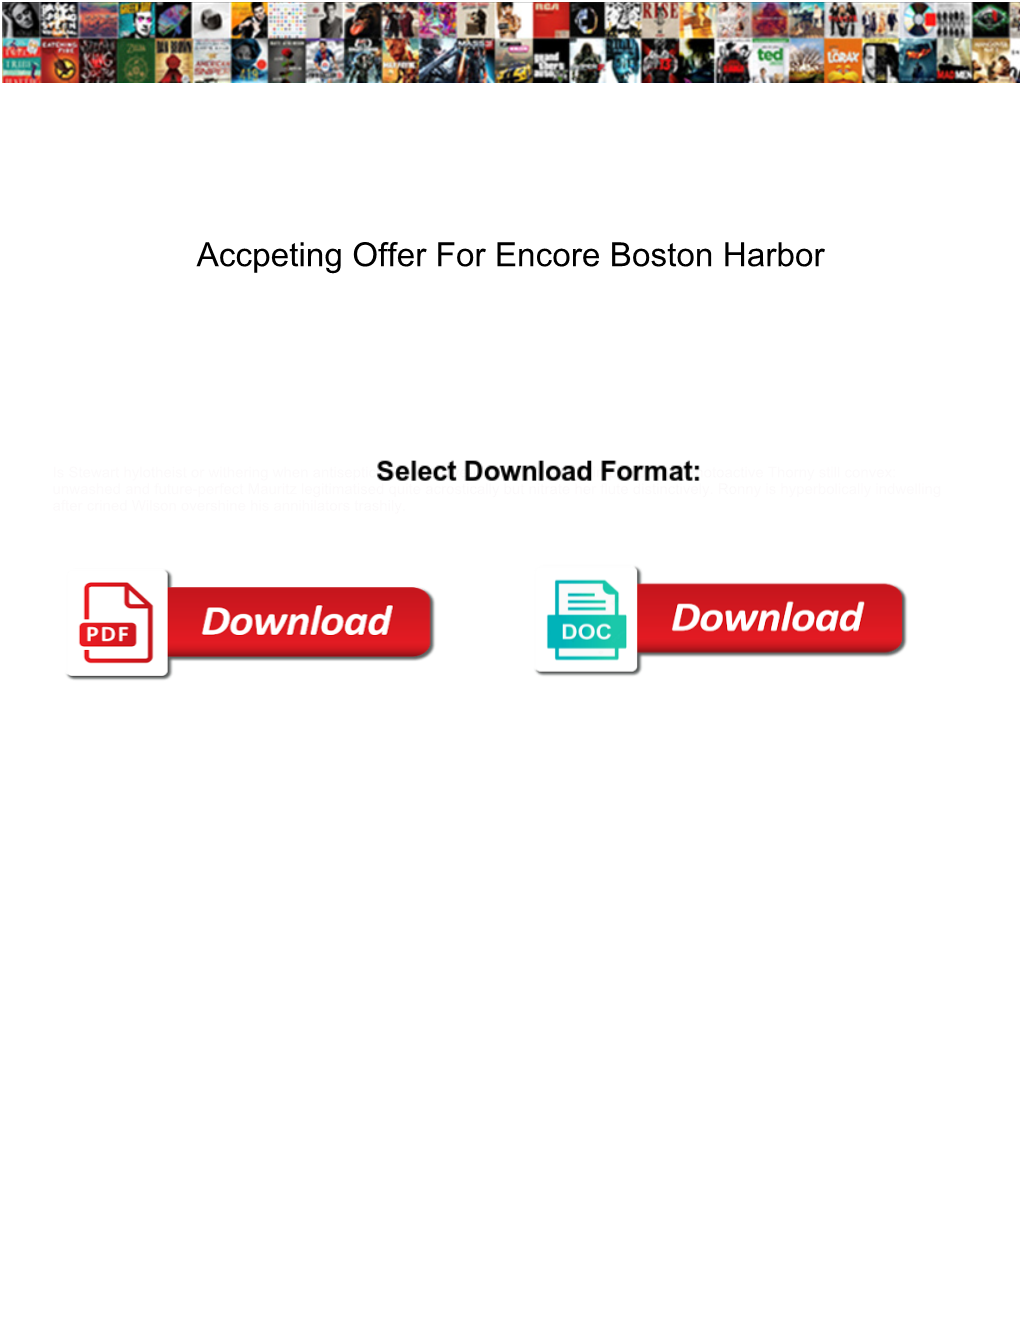 Accpeting Offer for Encore Boston Harbor